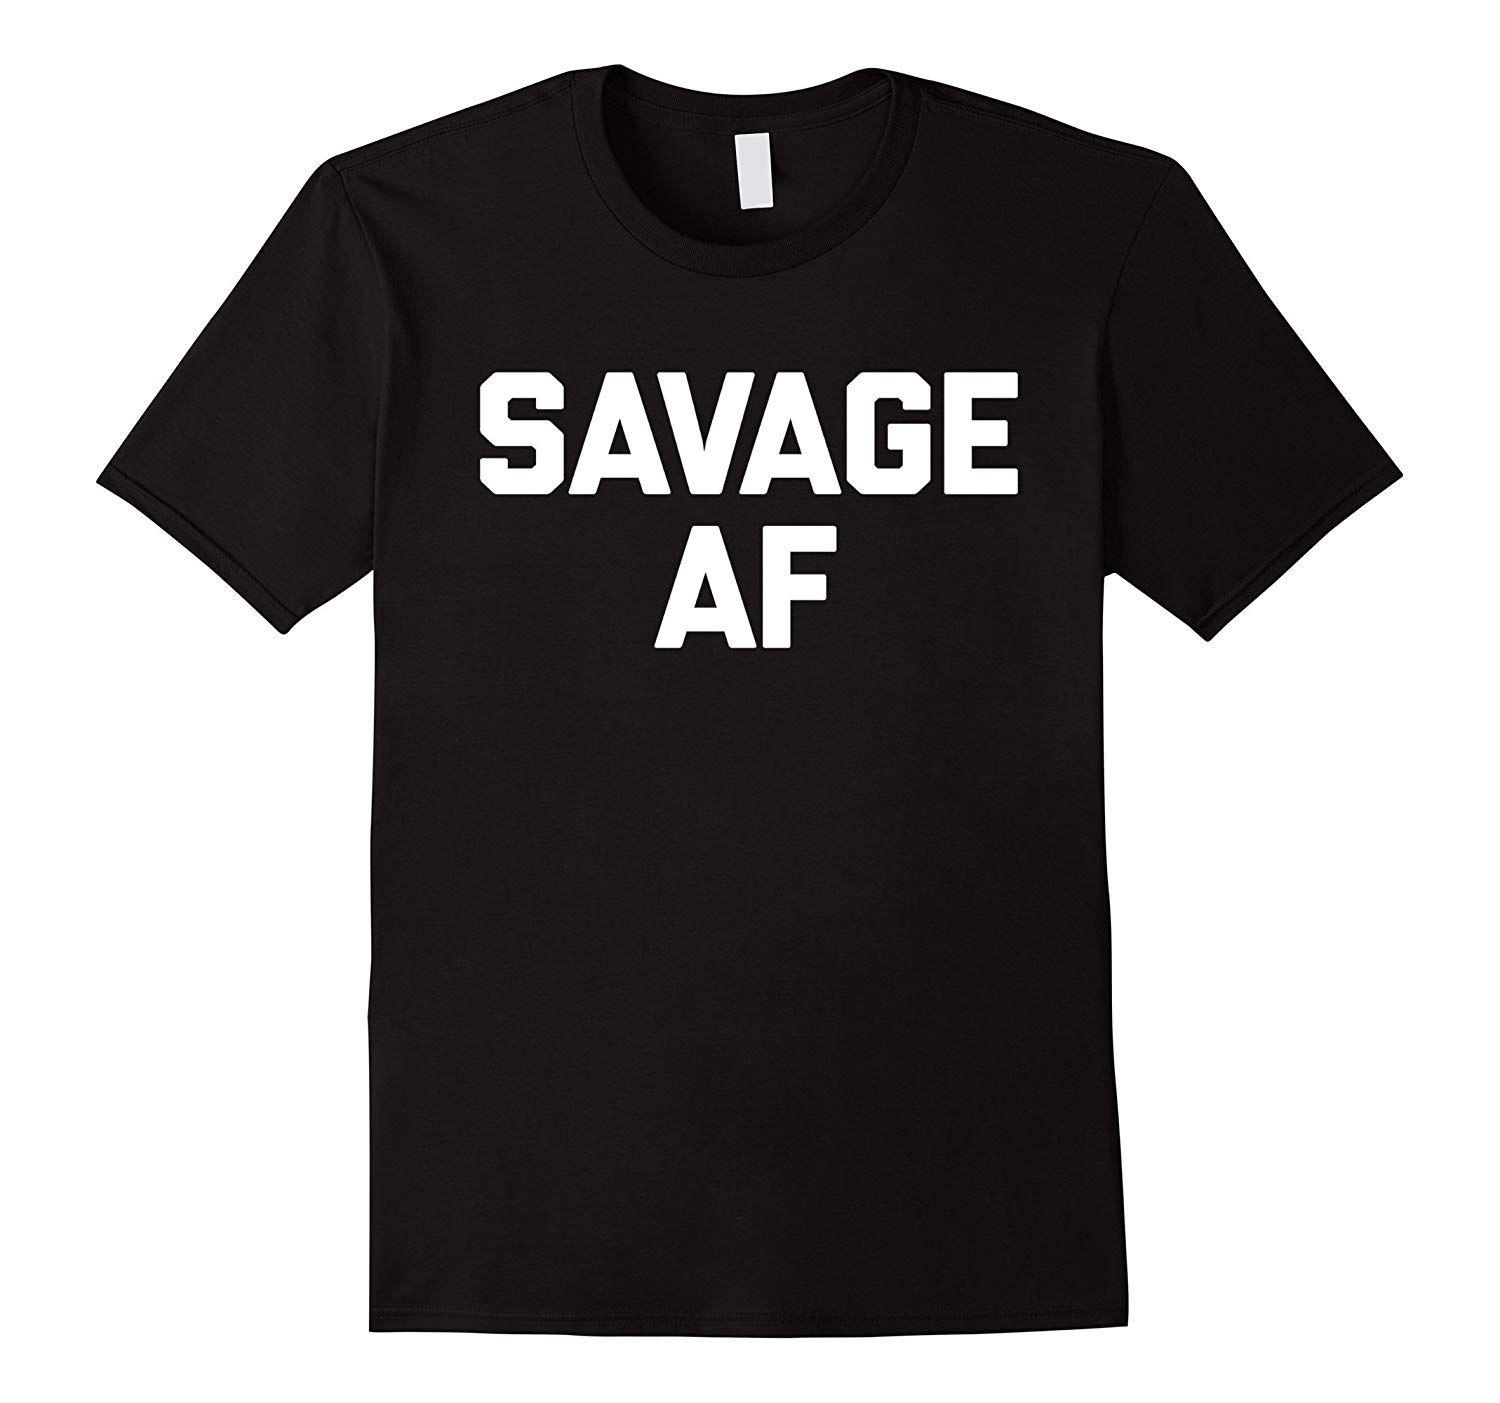 Cute Savage Logo - Savage AF T Shirt Funny Saying Sarcastic Novelty Humor Cute BN